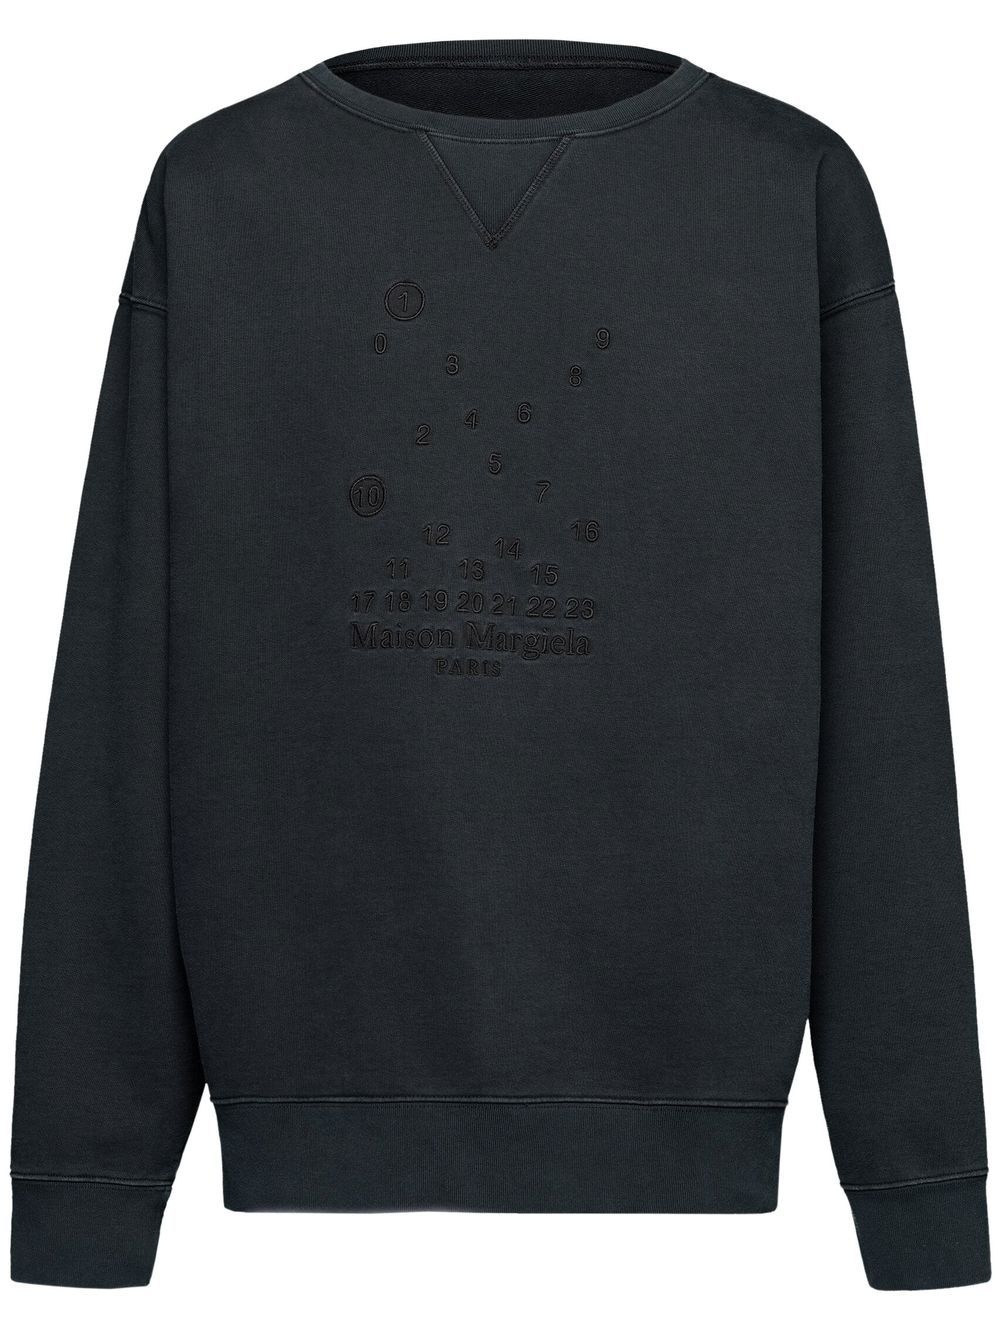 embroidered cotton sweatshirt - 1